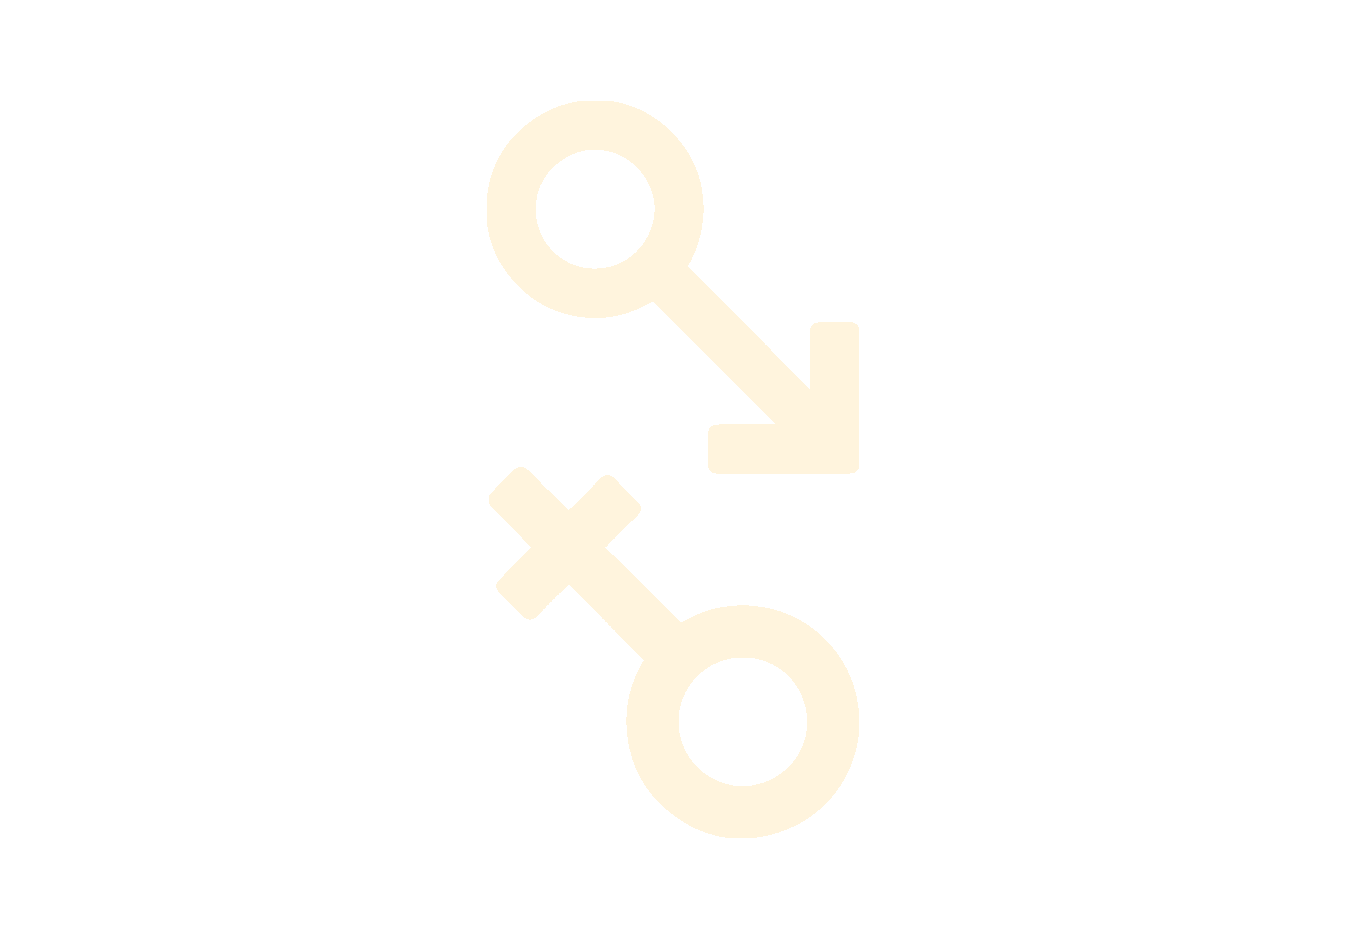 pictogram men and women